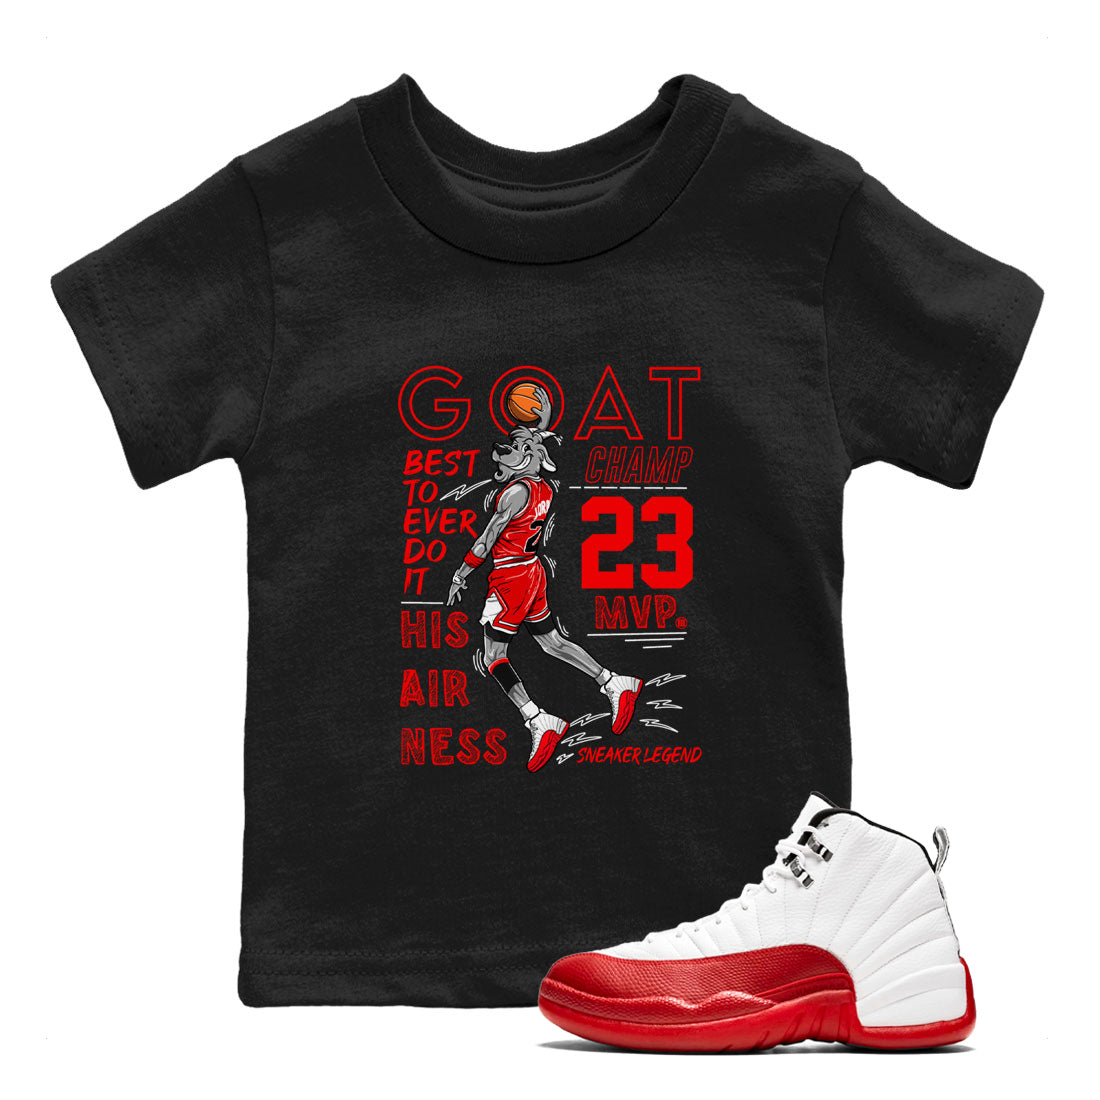 The Best Nike Air Jordan 13 Sneakers from GOAT